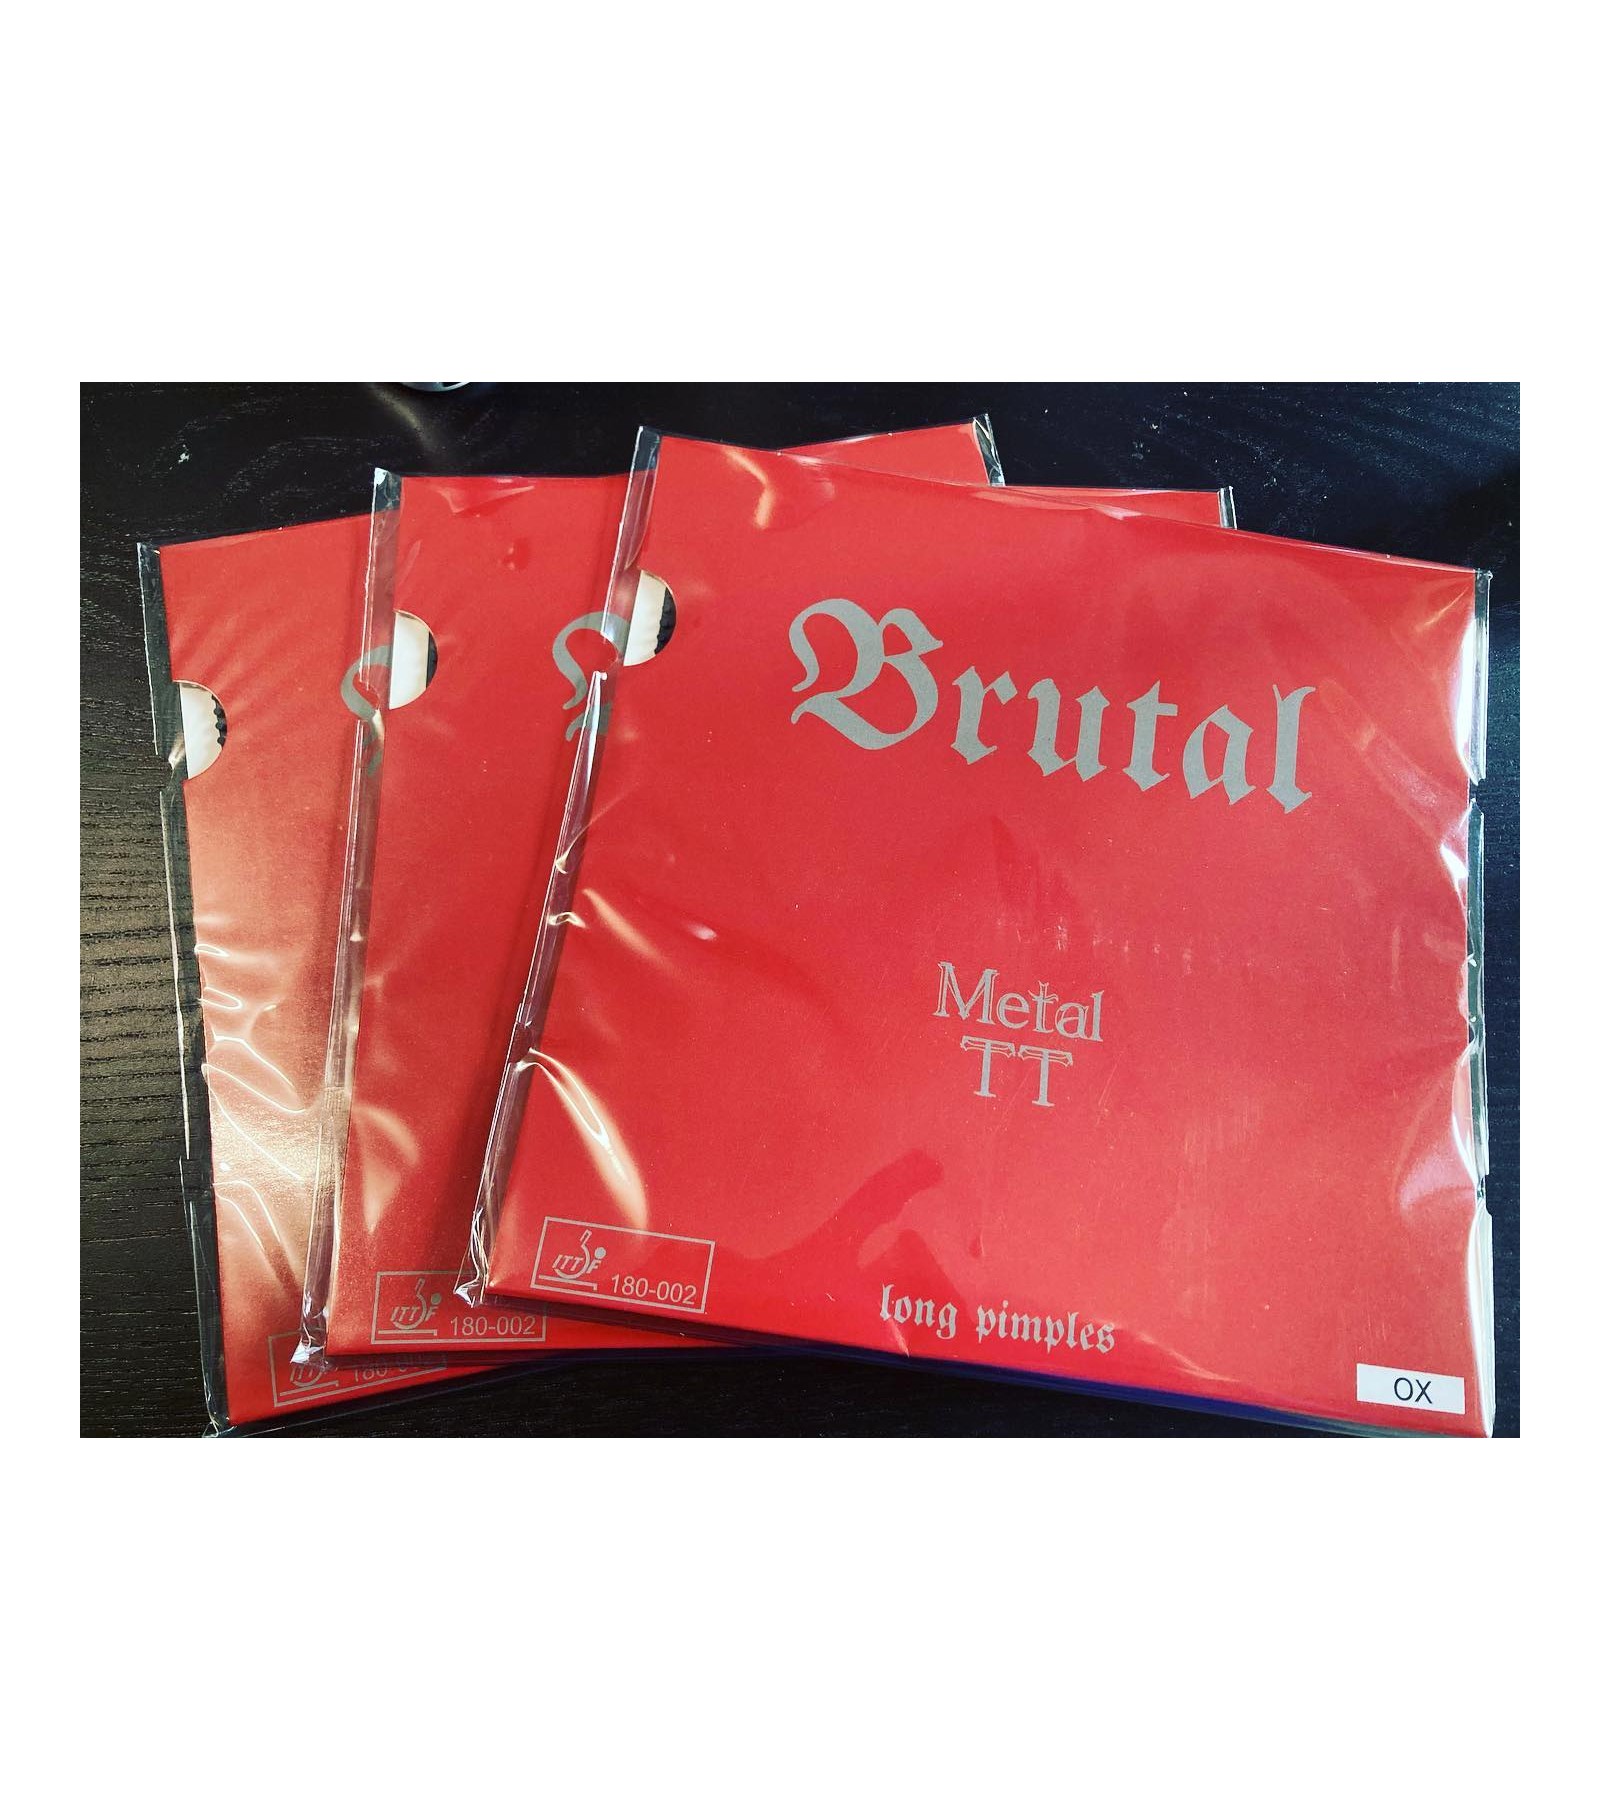 TT Metal - Brutal Barva: Červená, Tloušťka houby: 1,0